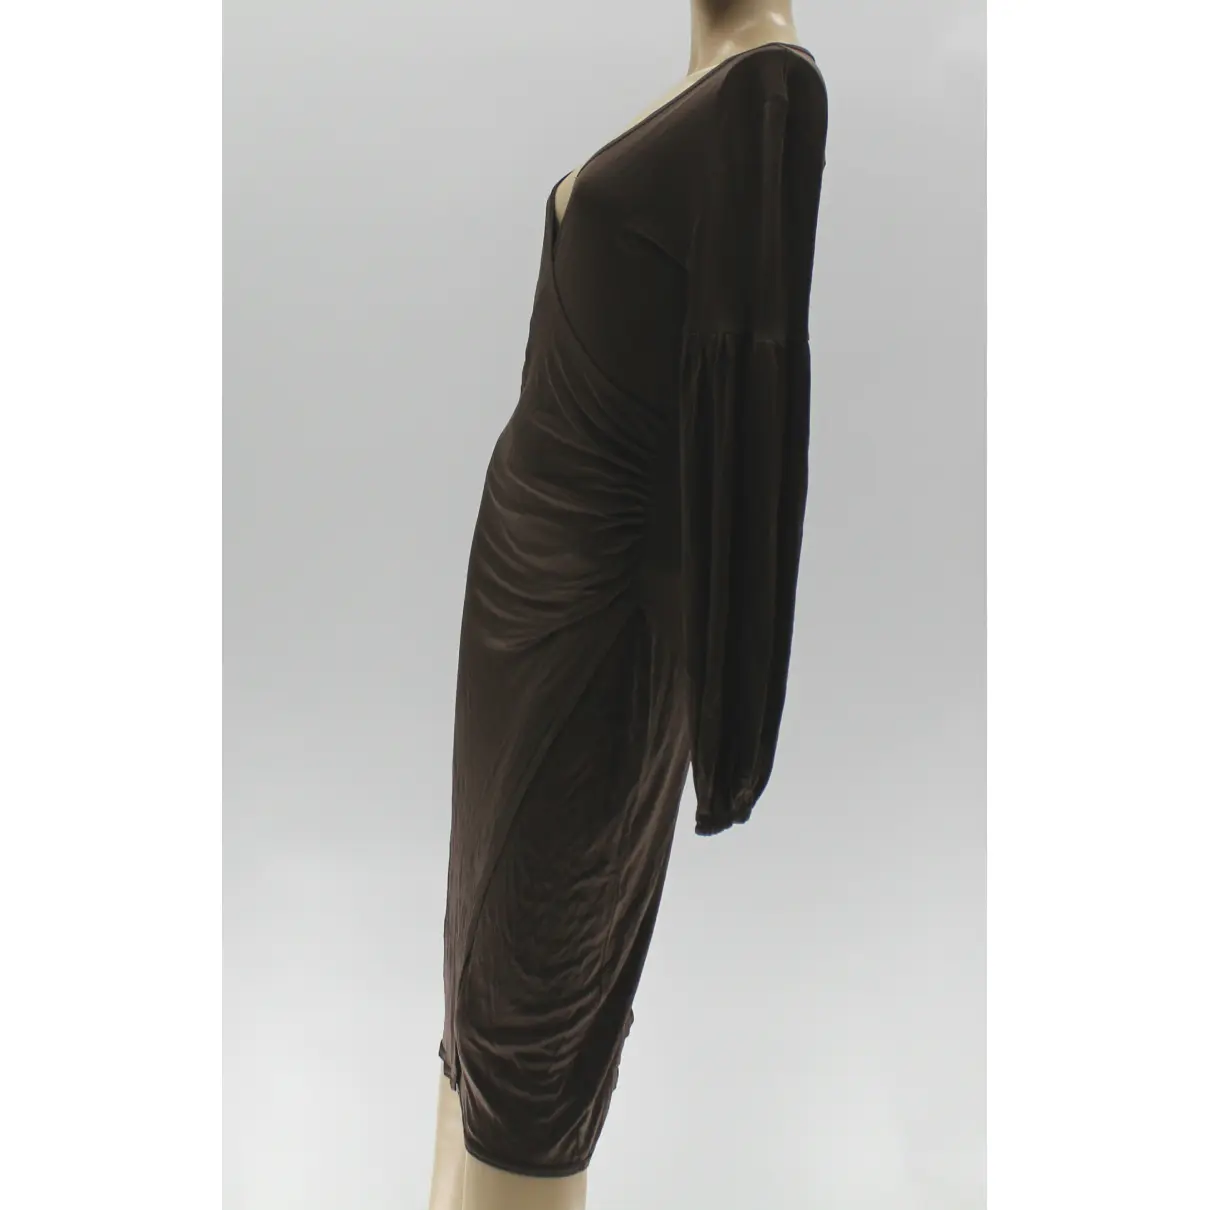 Silk mid-length dress Louis Feraud